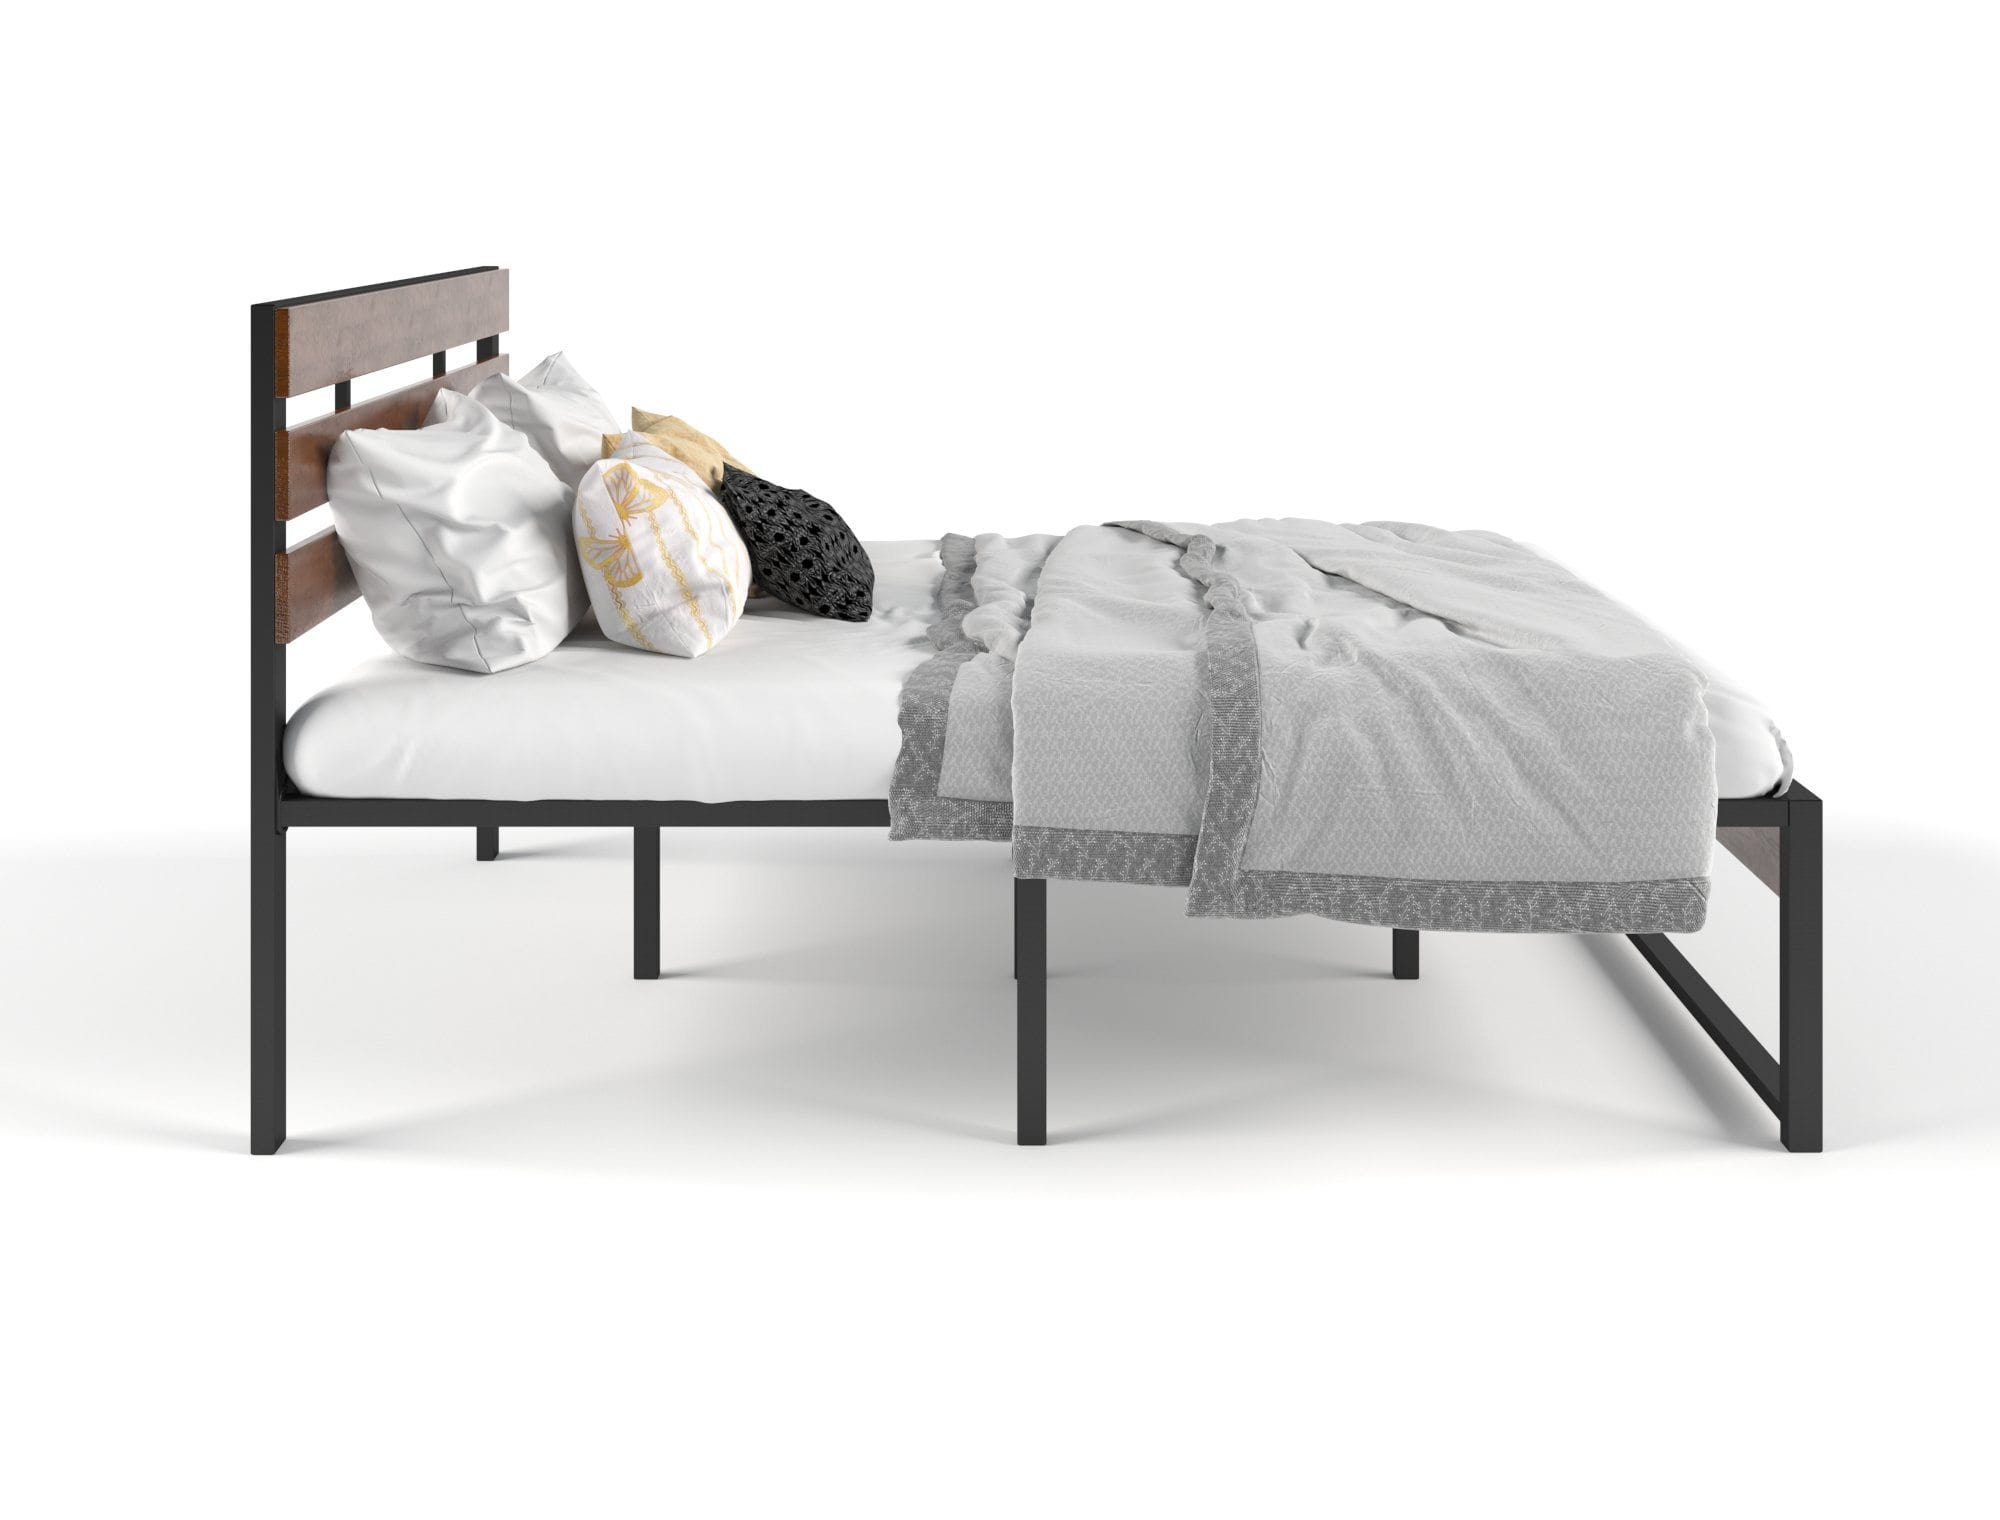 Ora Wooden and Metal Bed Frame Queen - Newstart Furniture